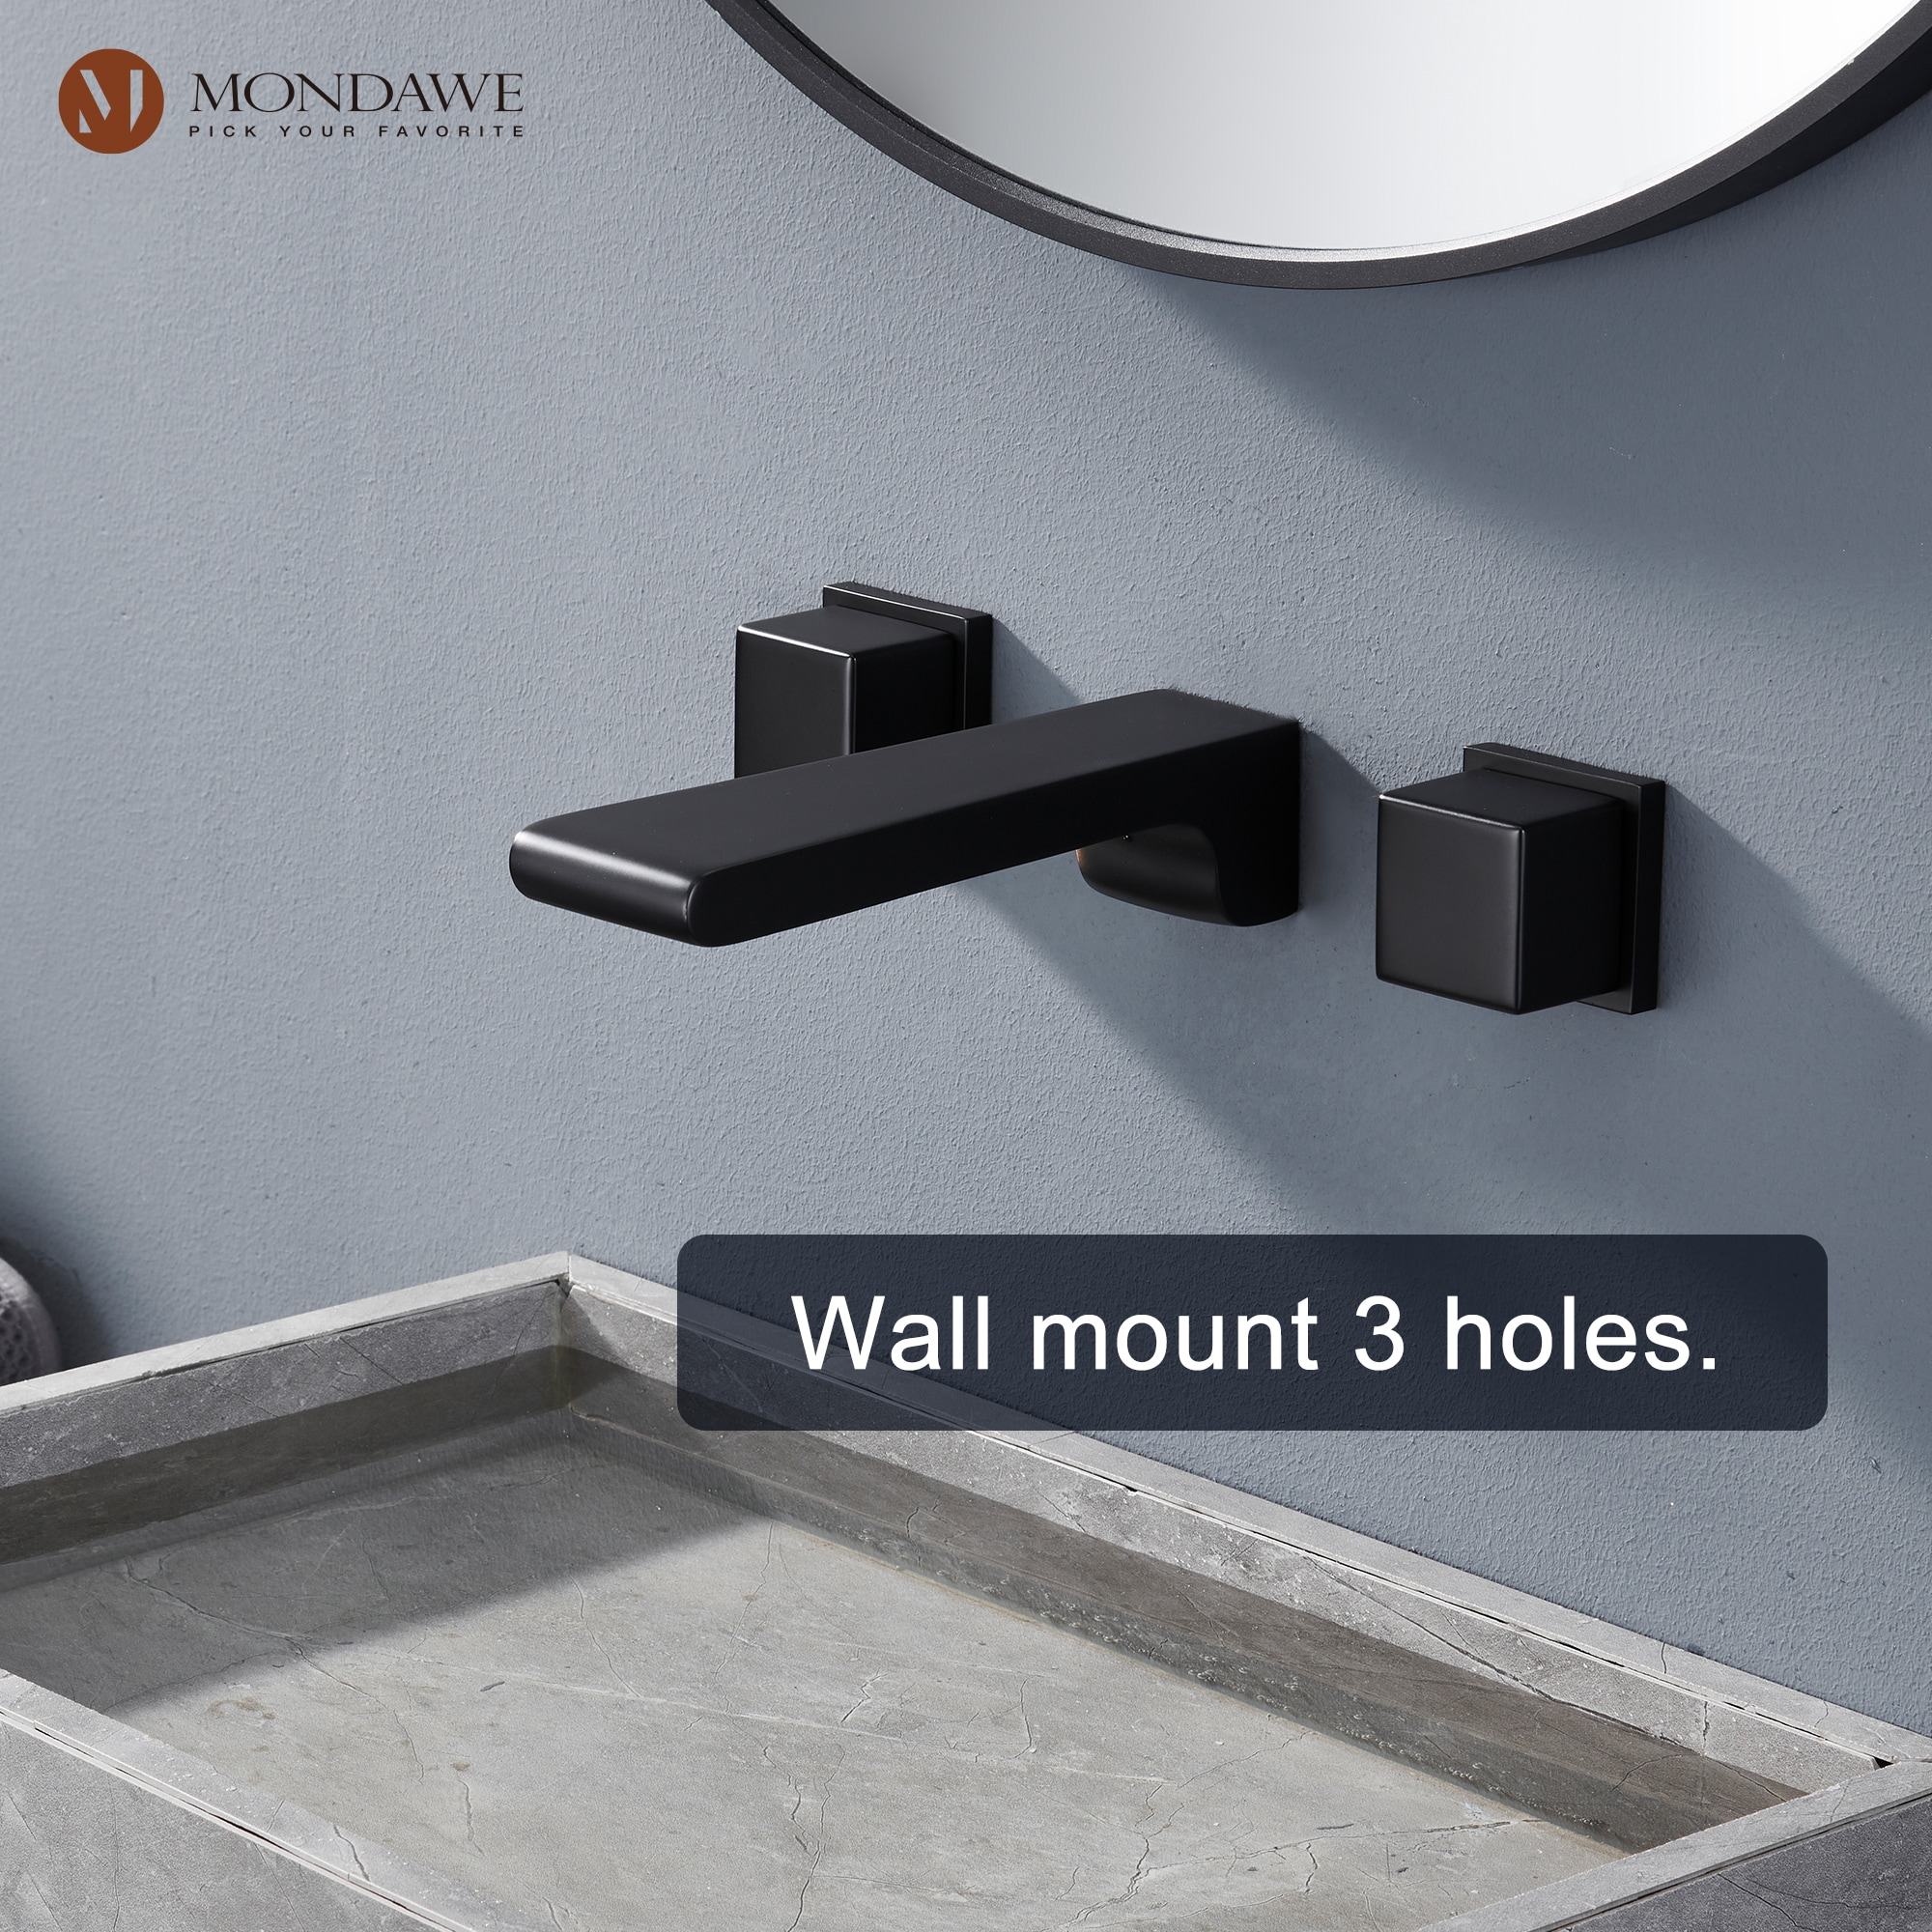 Mondawe Matte Black 2-handle Wall-mount Waterfall Bathroom Sink Faucet